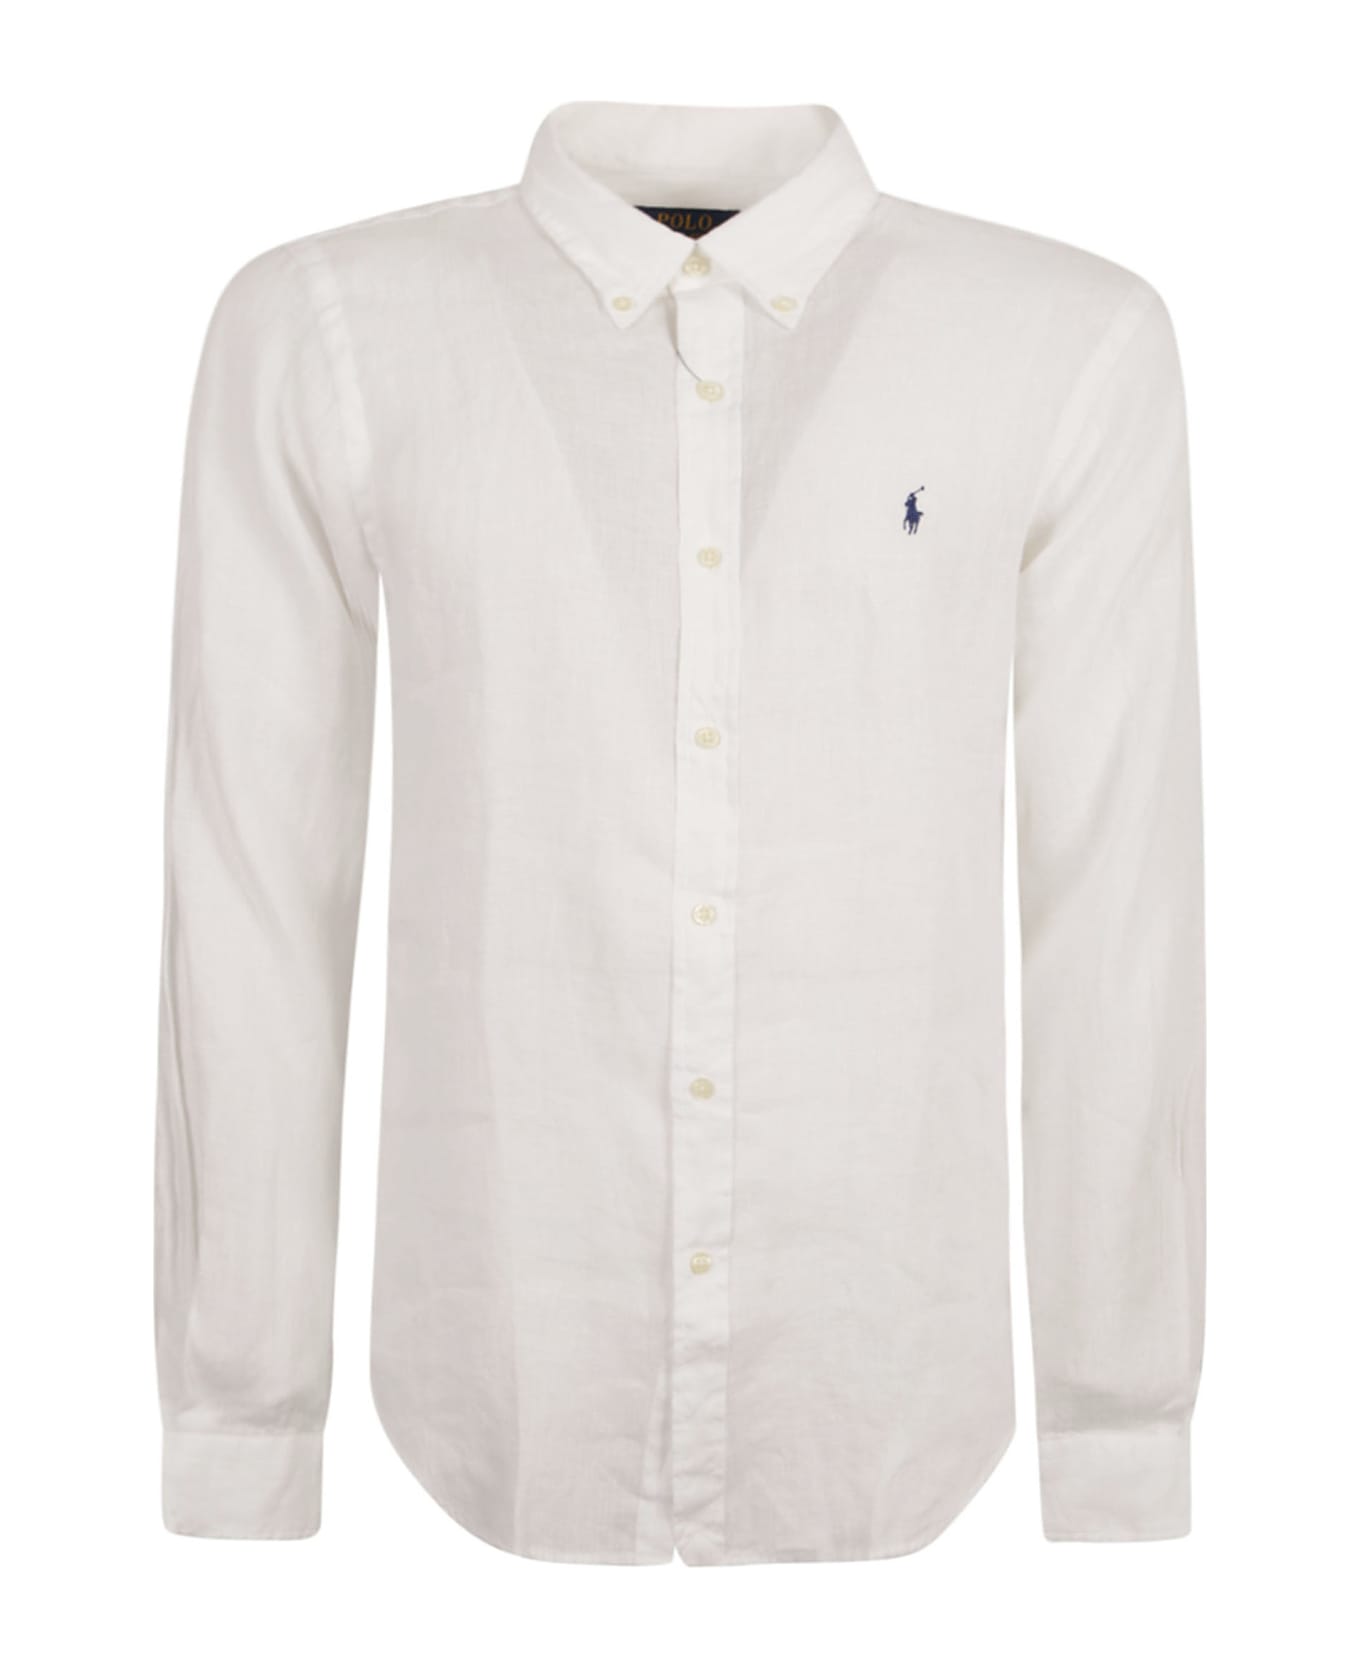 Ralph Lauren Logo Embroidered Round Hem Plain Shirt - White シャツ